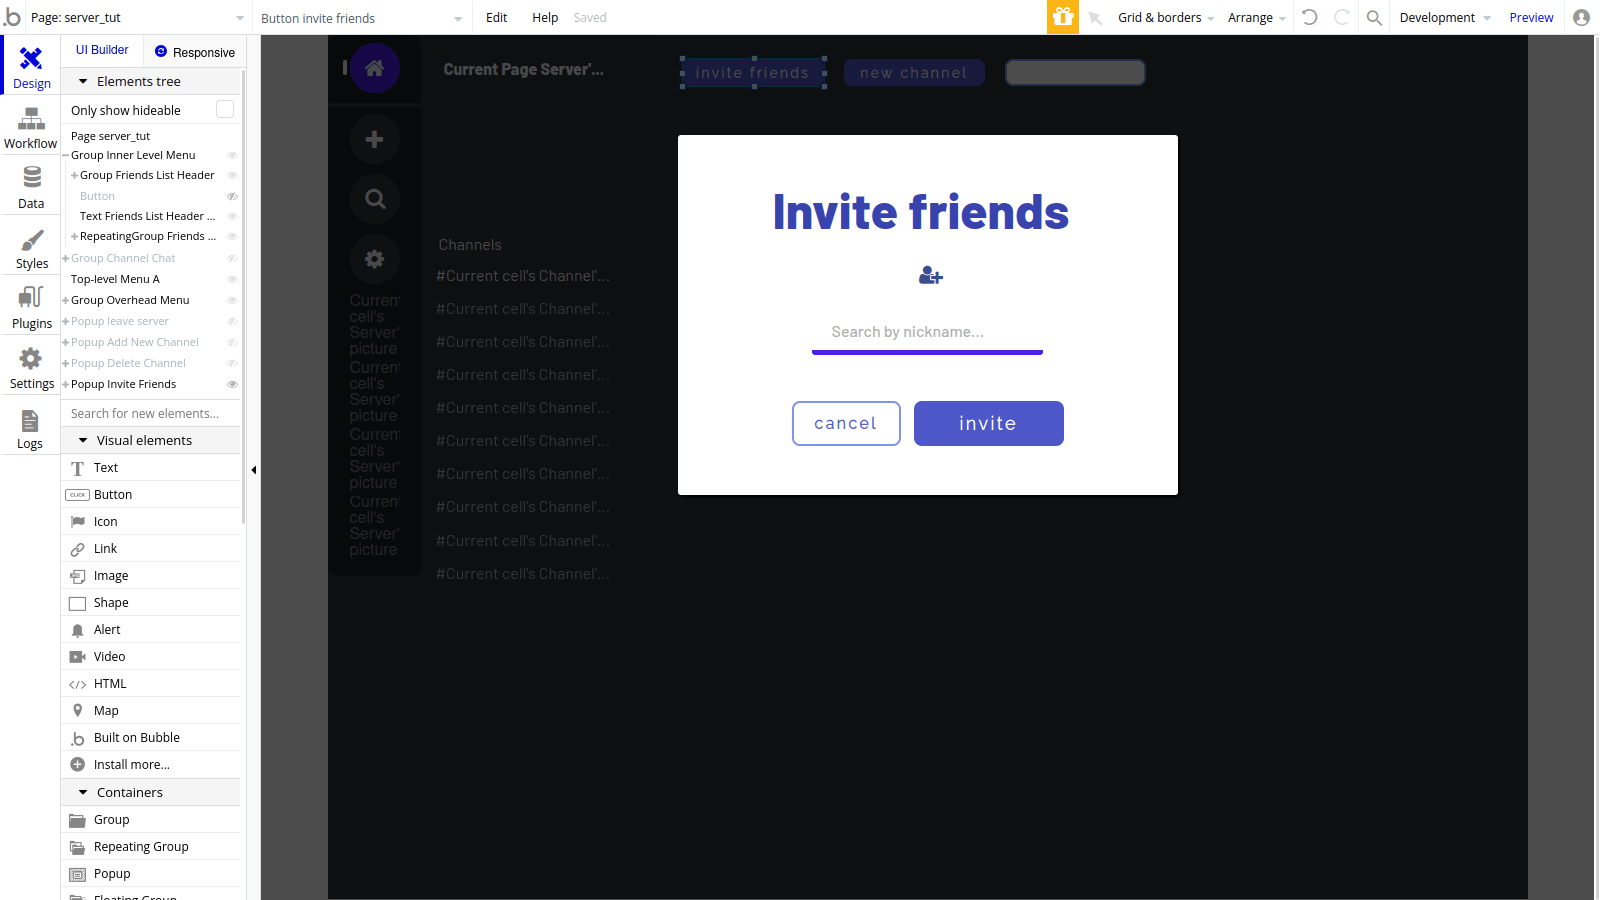 Invite friends popup in Discord clone built with Bubble.